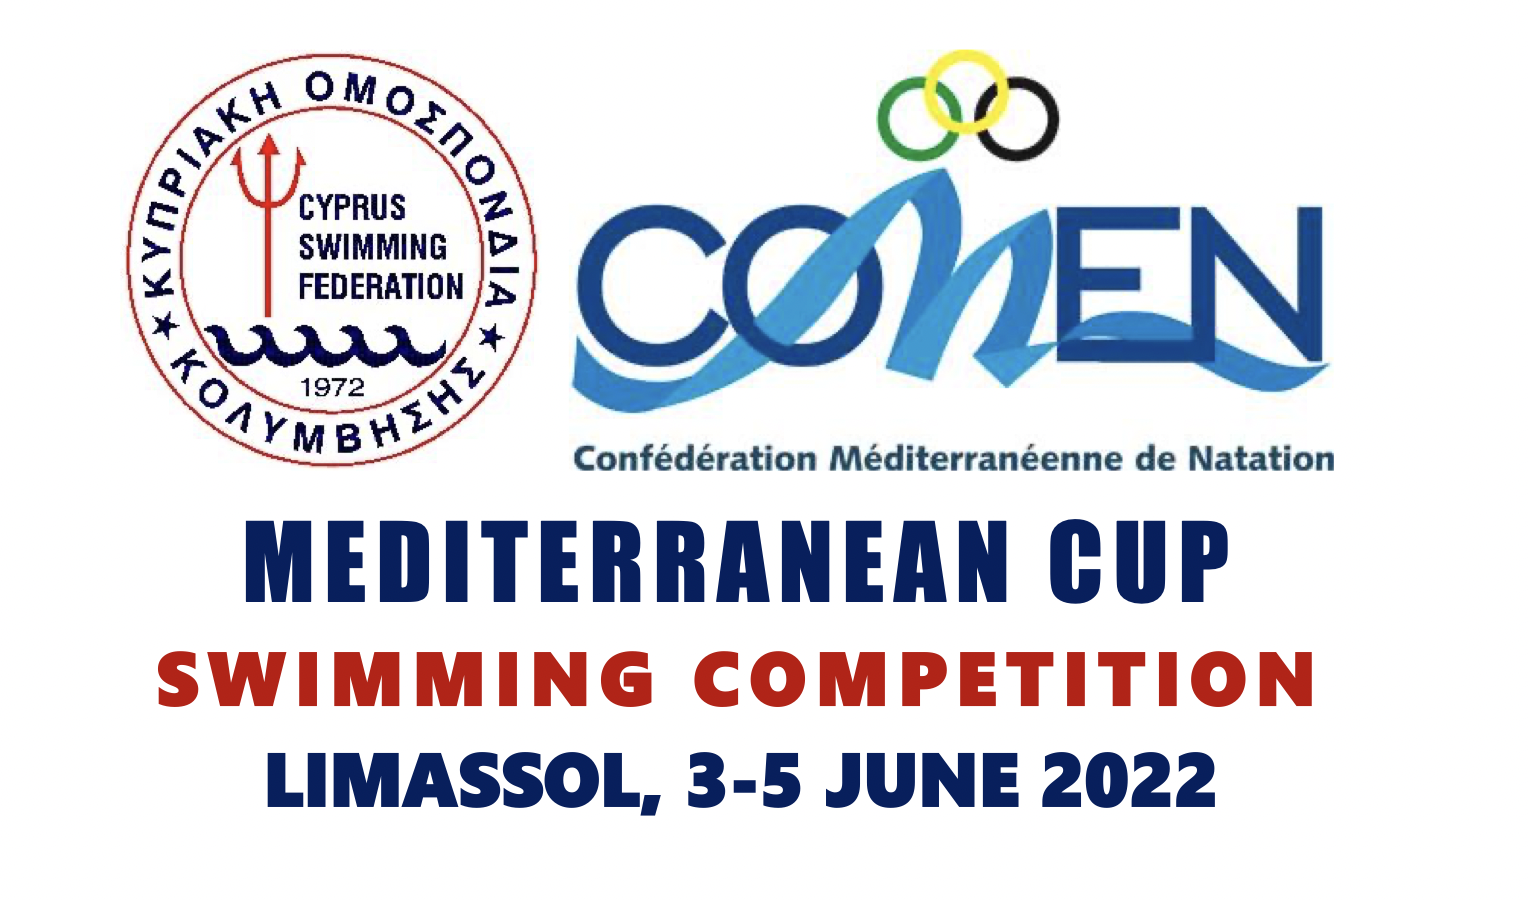 Coppa Comen – Mediterranean Cup